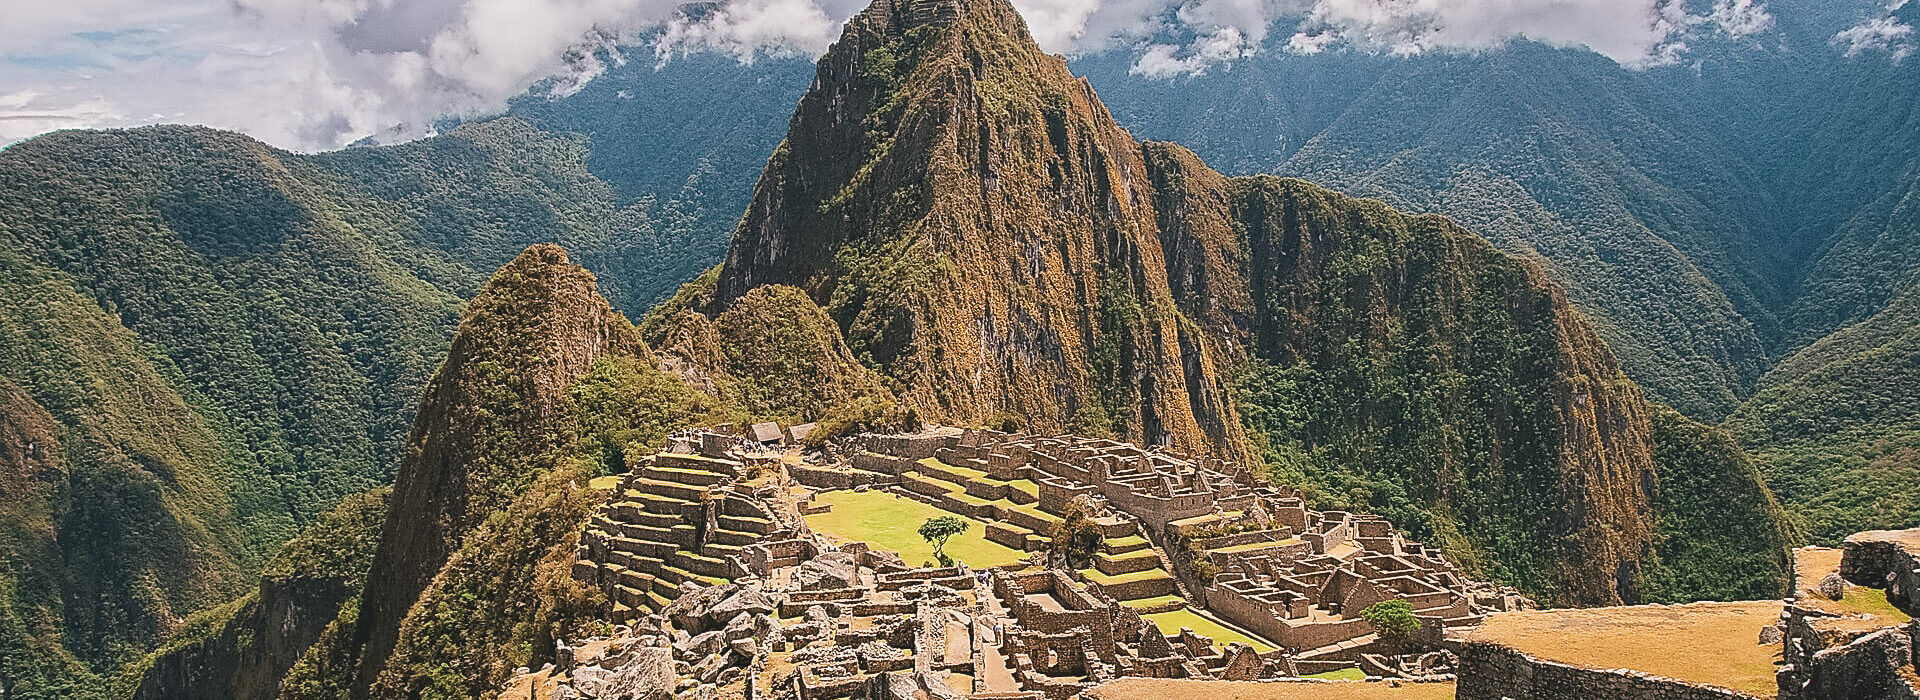 Machu Picchu with Earth's Edge 2